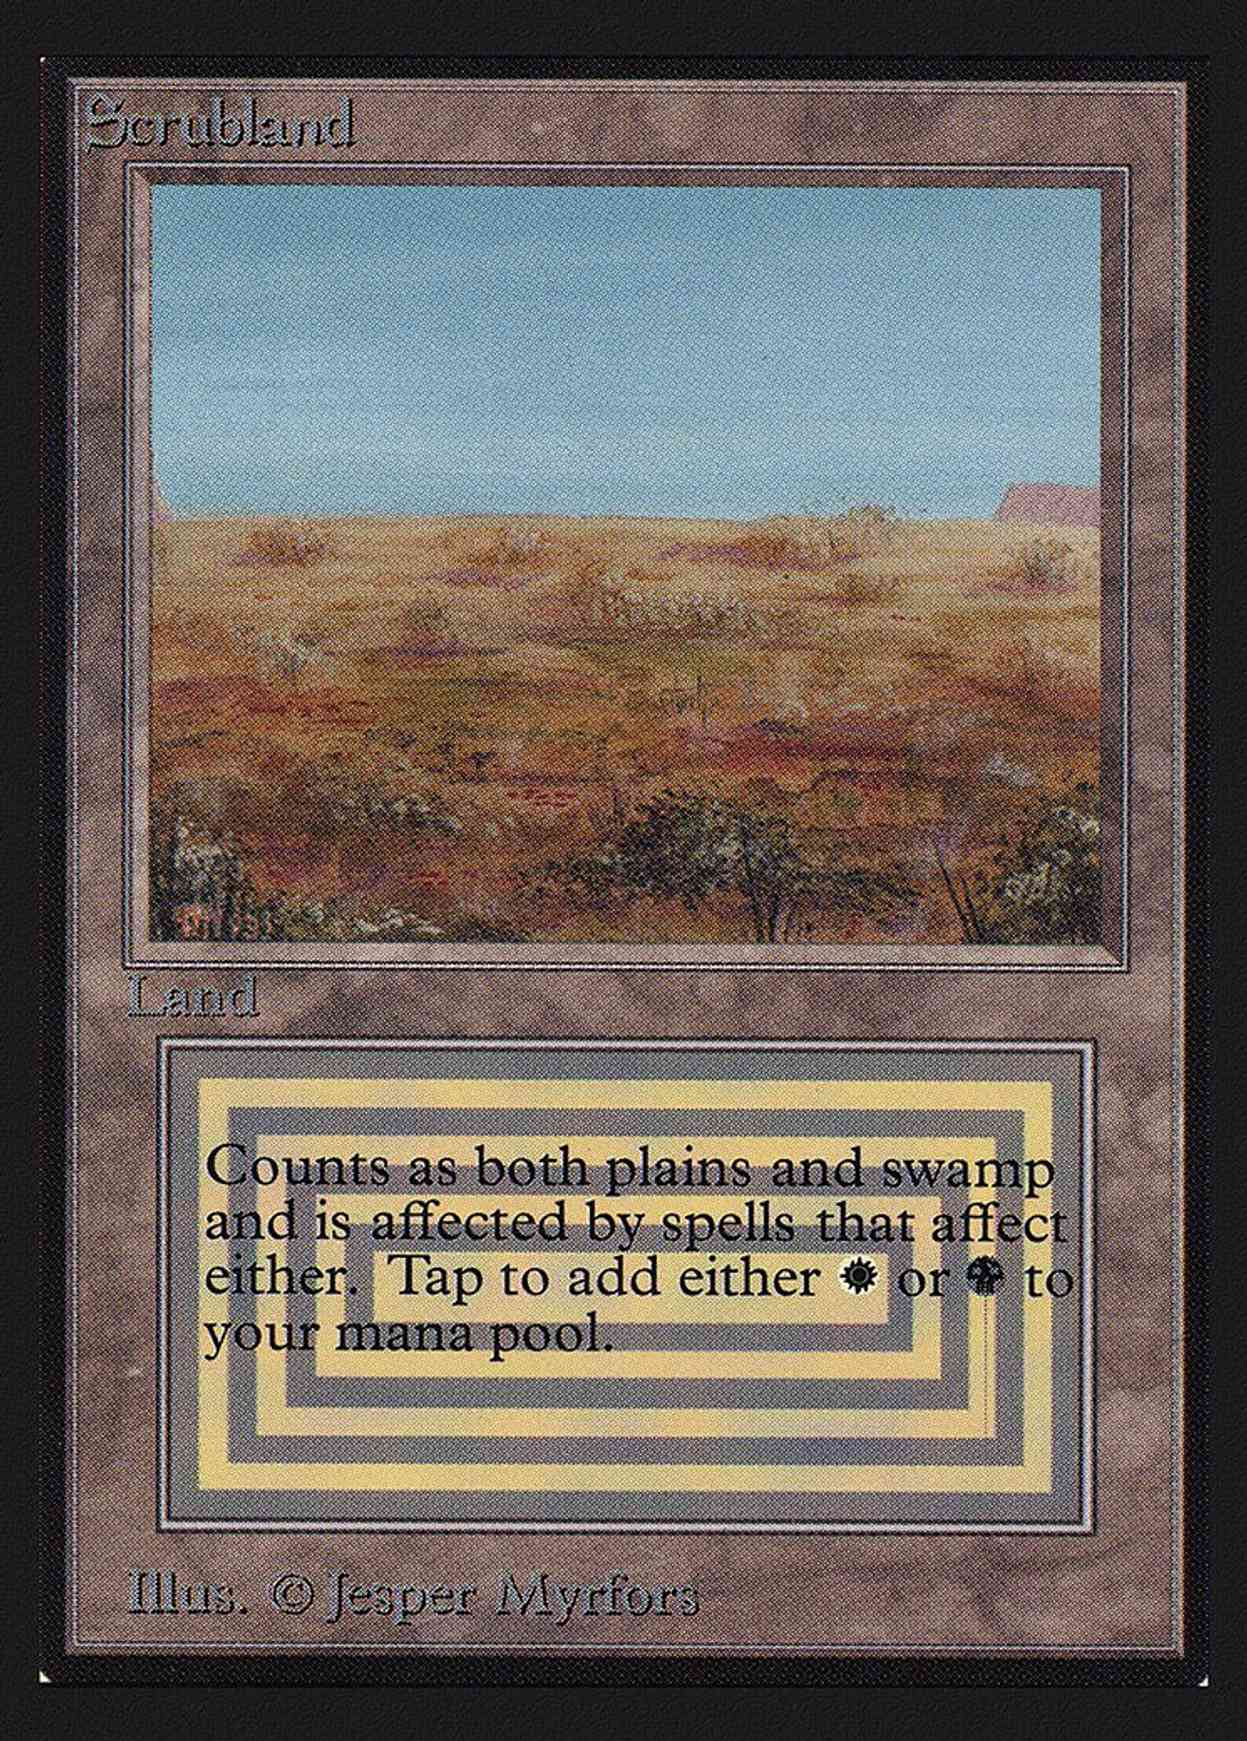 Scrubland (CE) magic card front